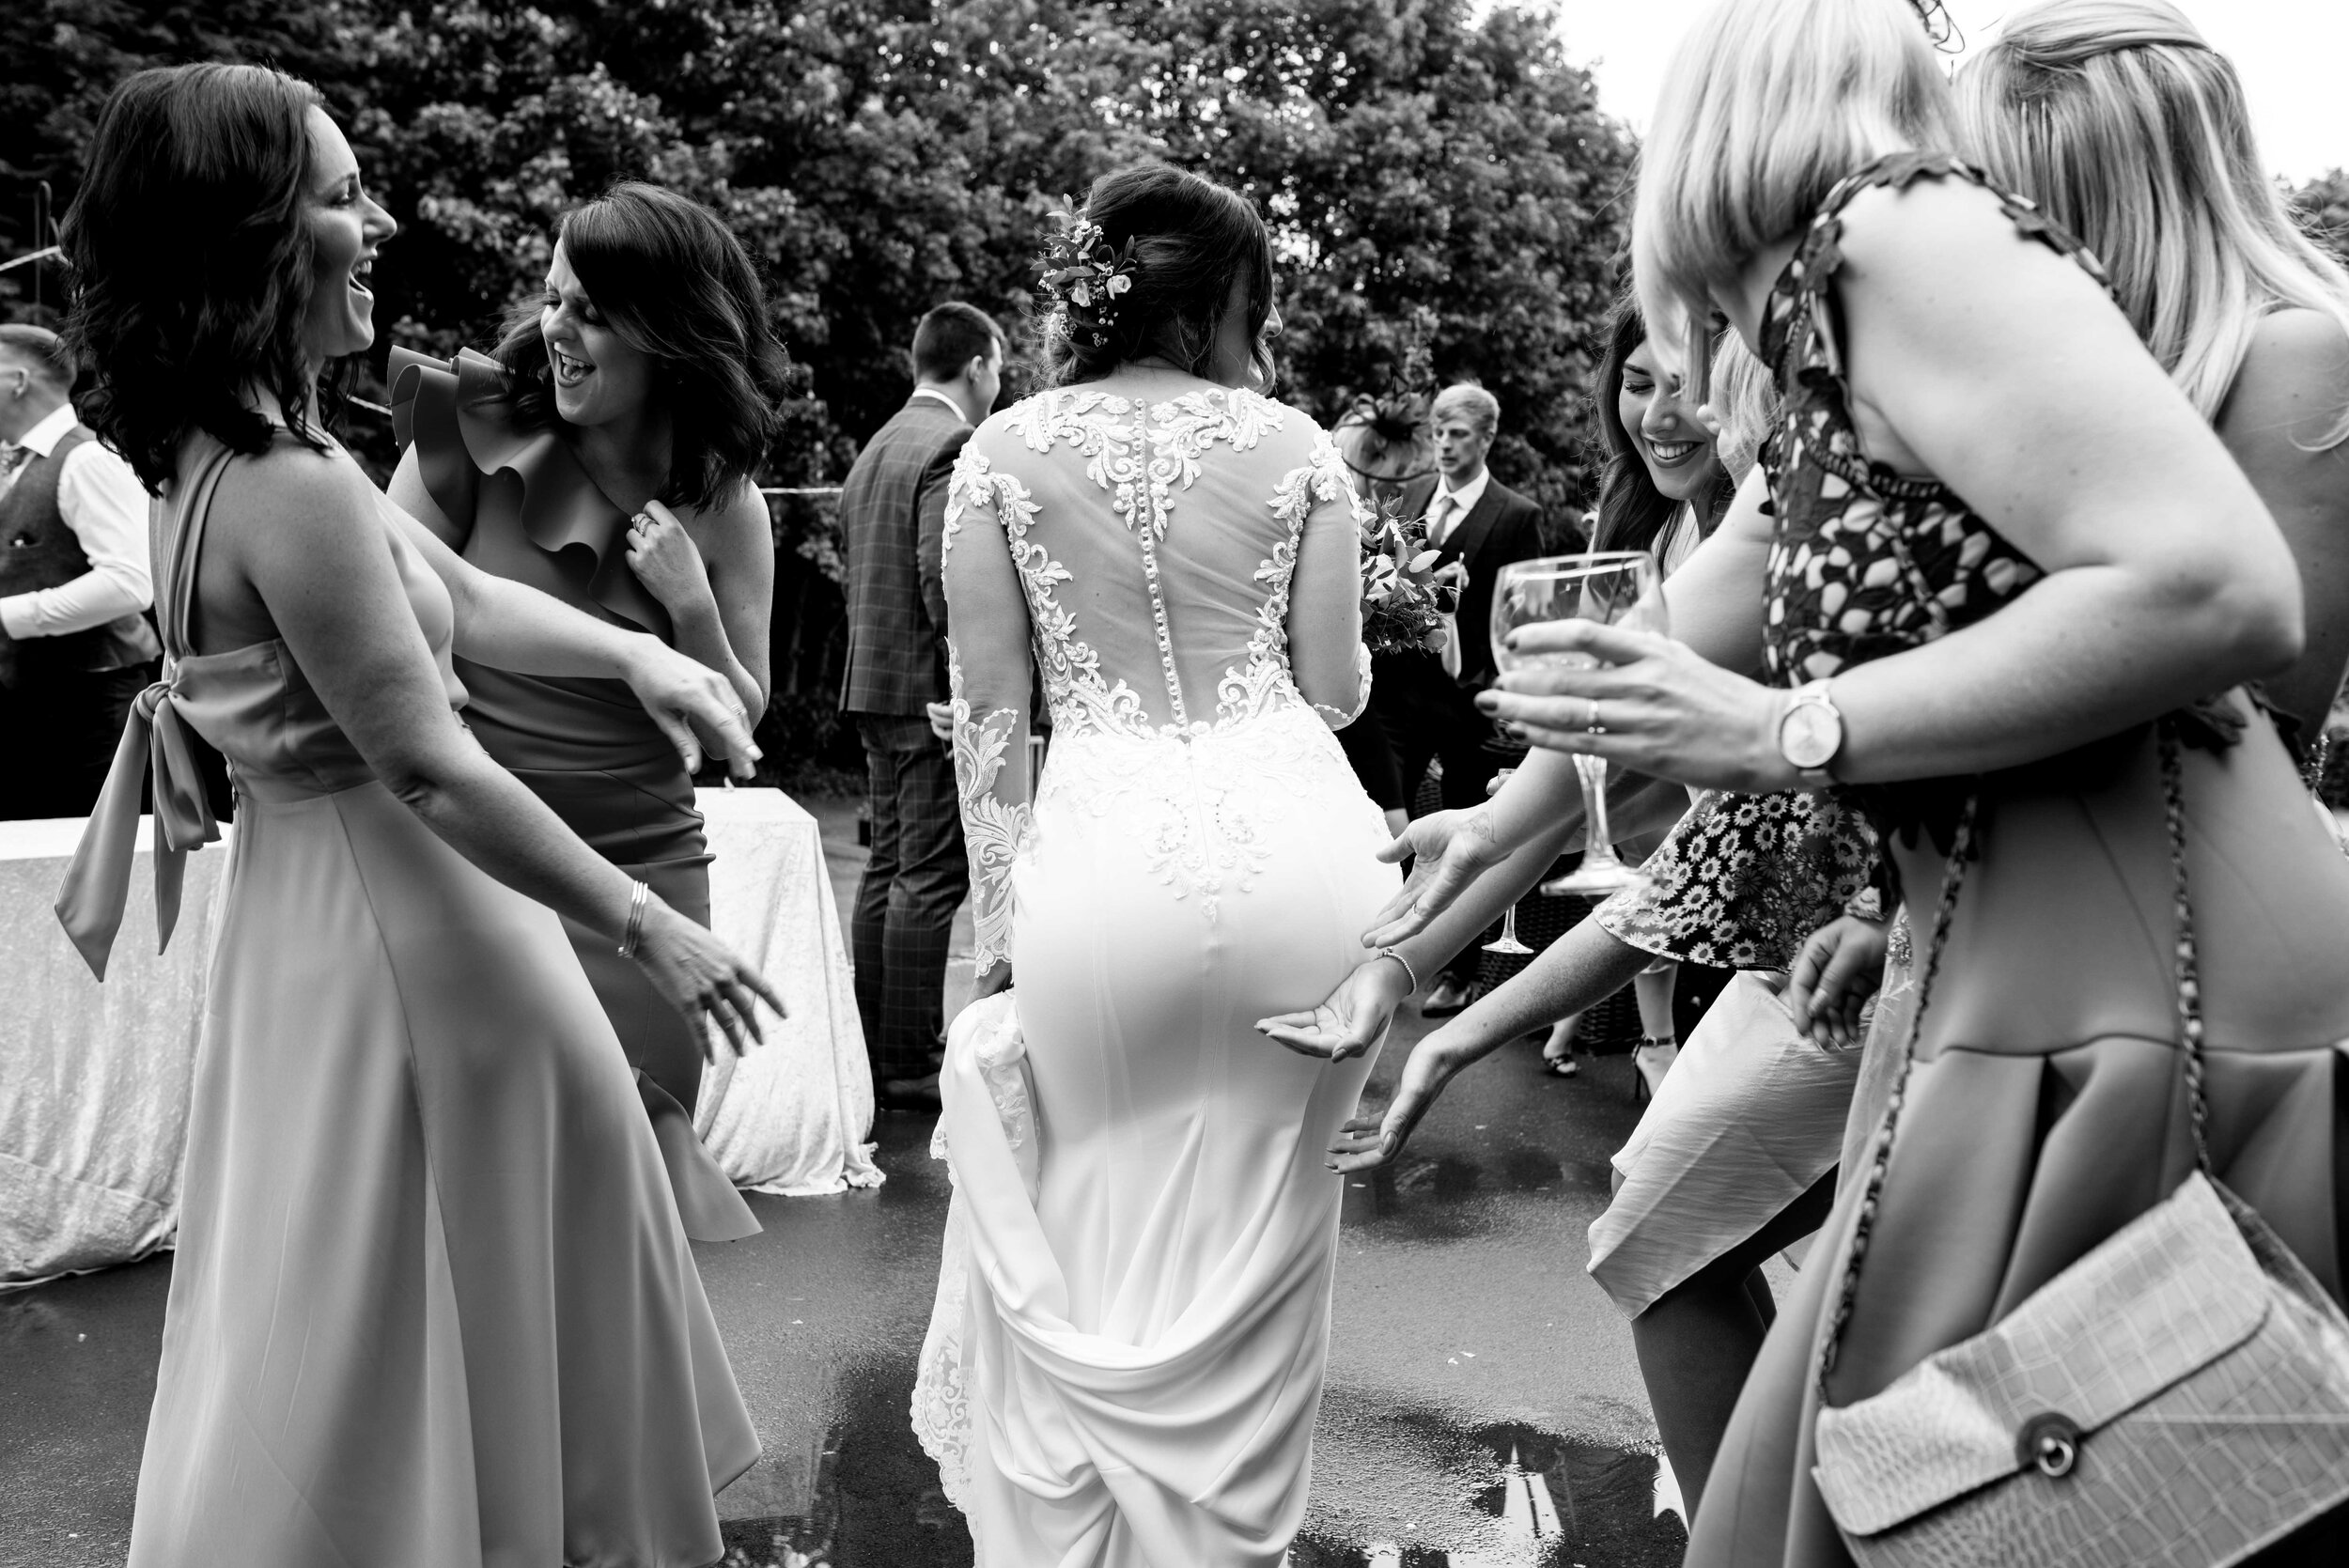 Wedding guests admire the brides dress